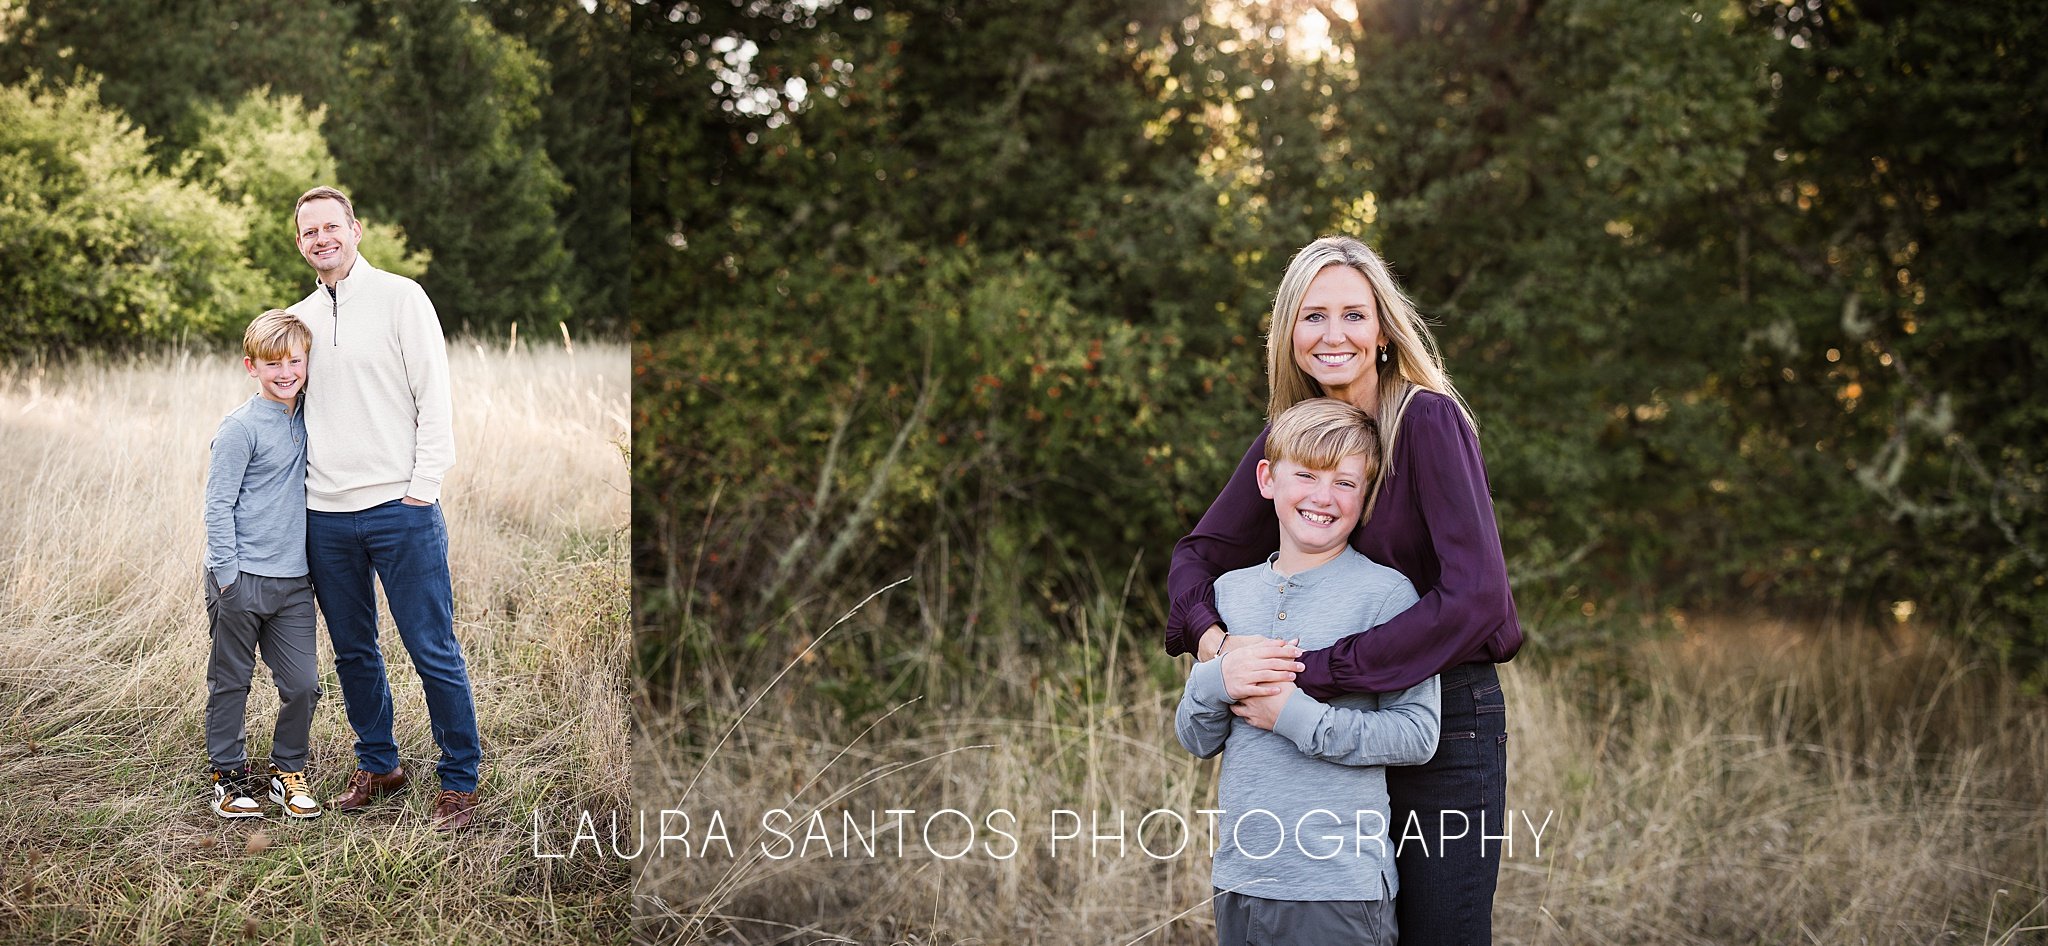 Laura Santos Photography Portland Oregon Family Photographer_4804.jpg